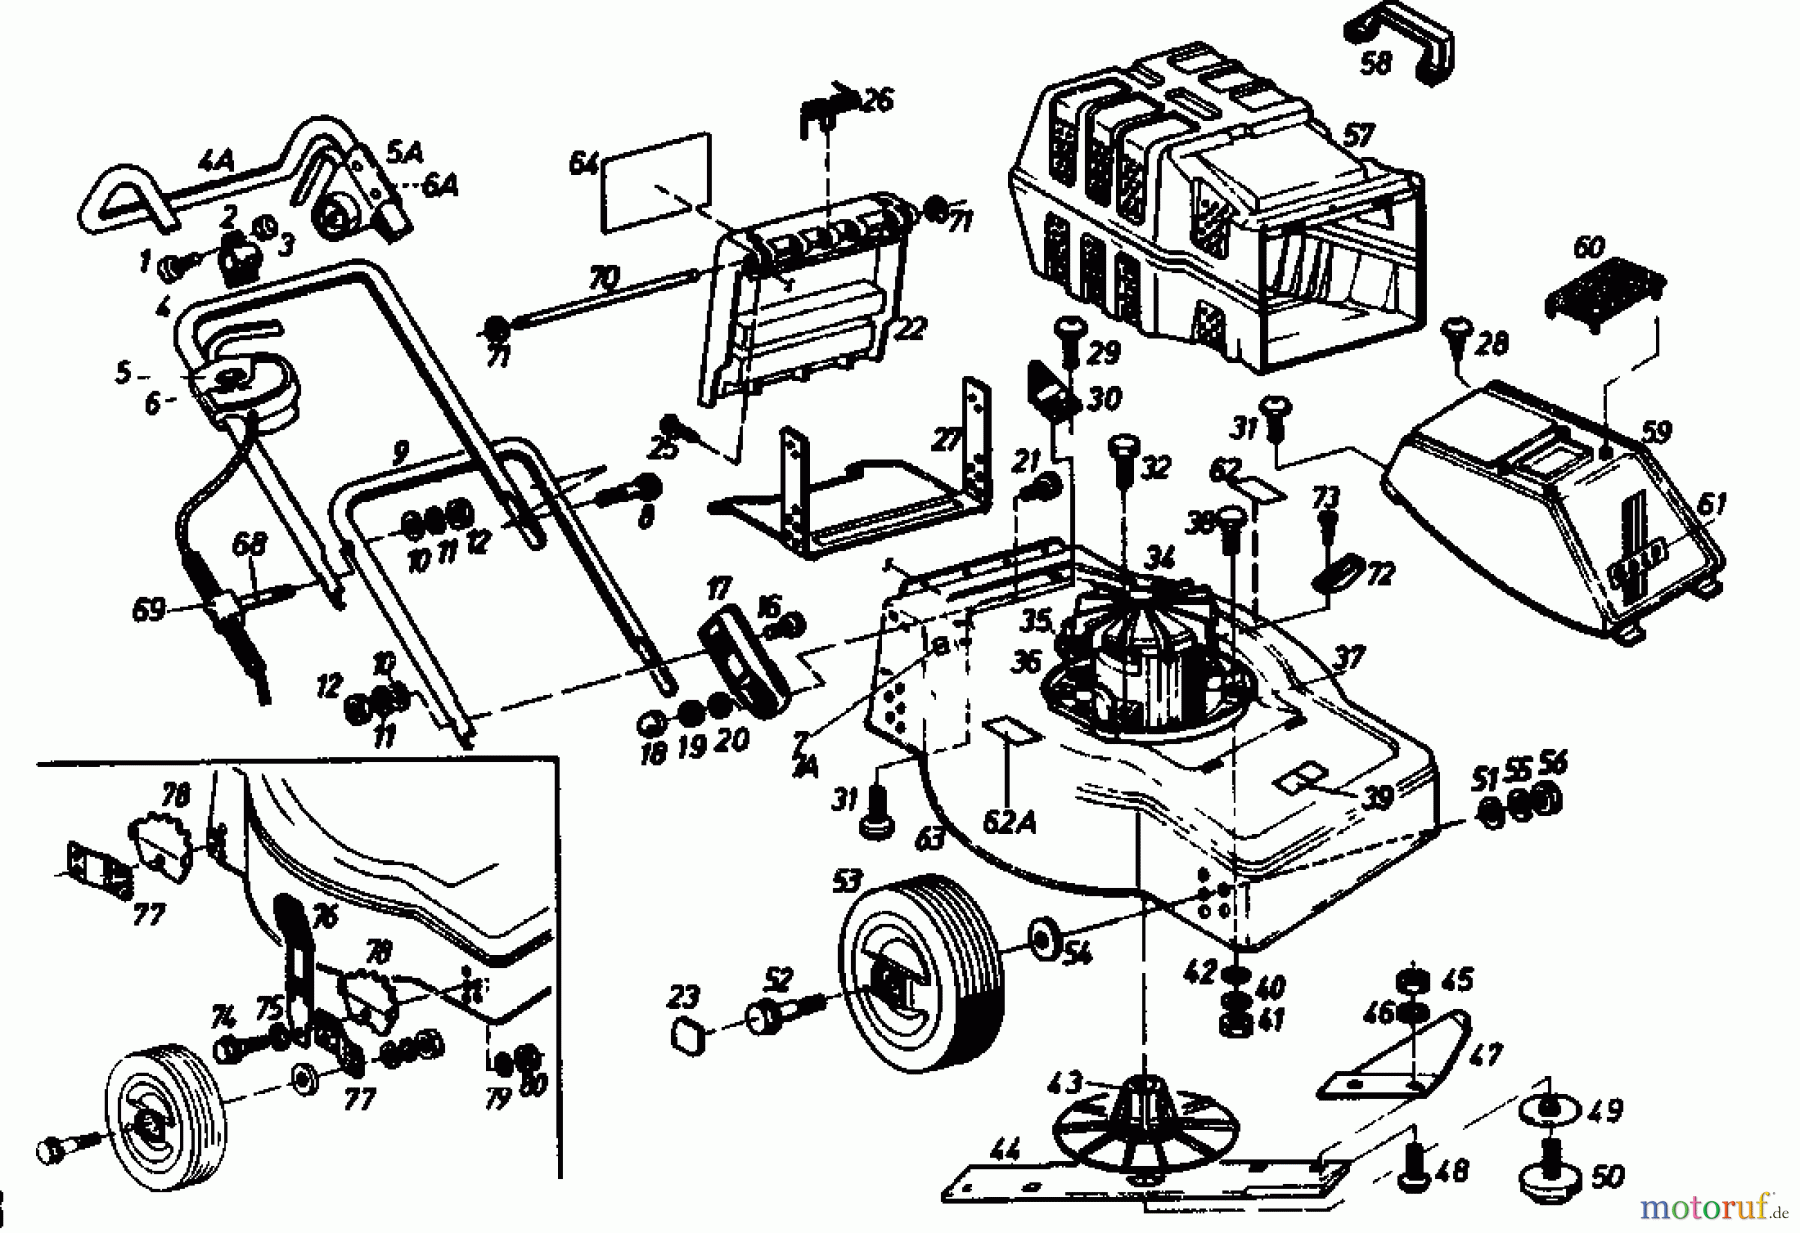  Golf Electric mower Golf HEL 02881.05  (1988) Basic machine